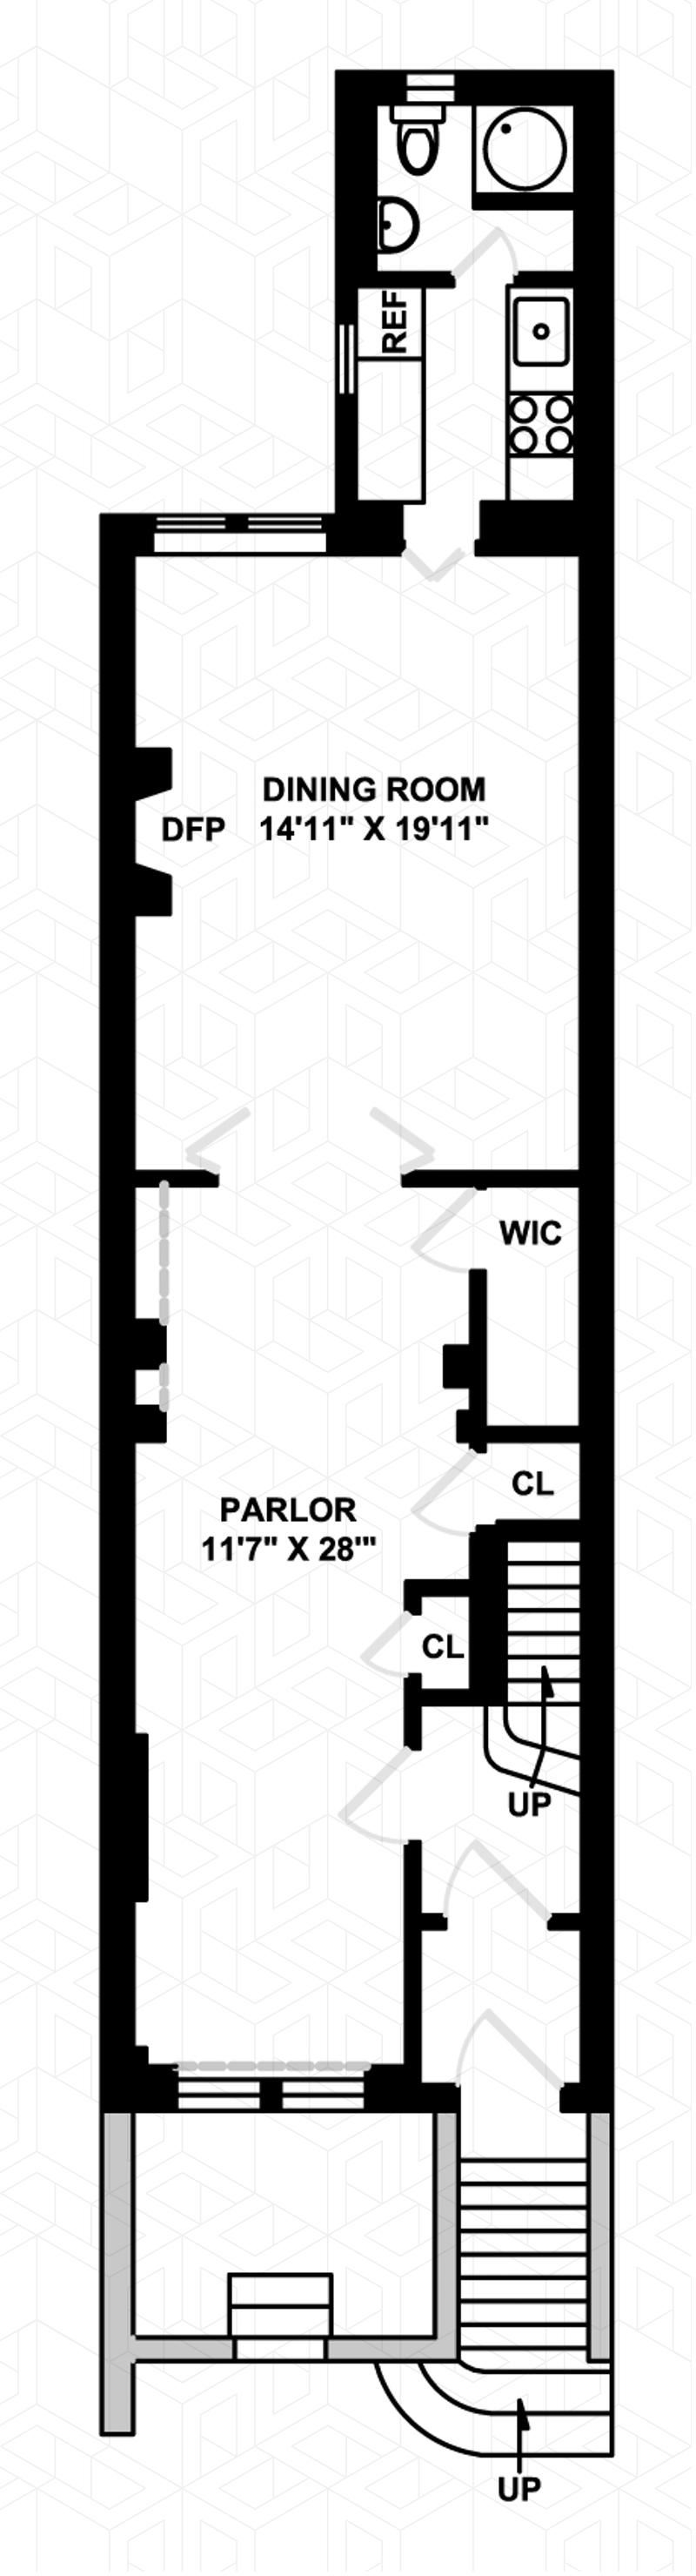 Floorplan for 123 West 78th Street, P